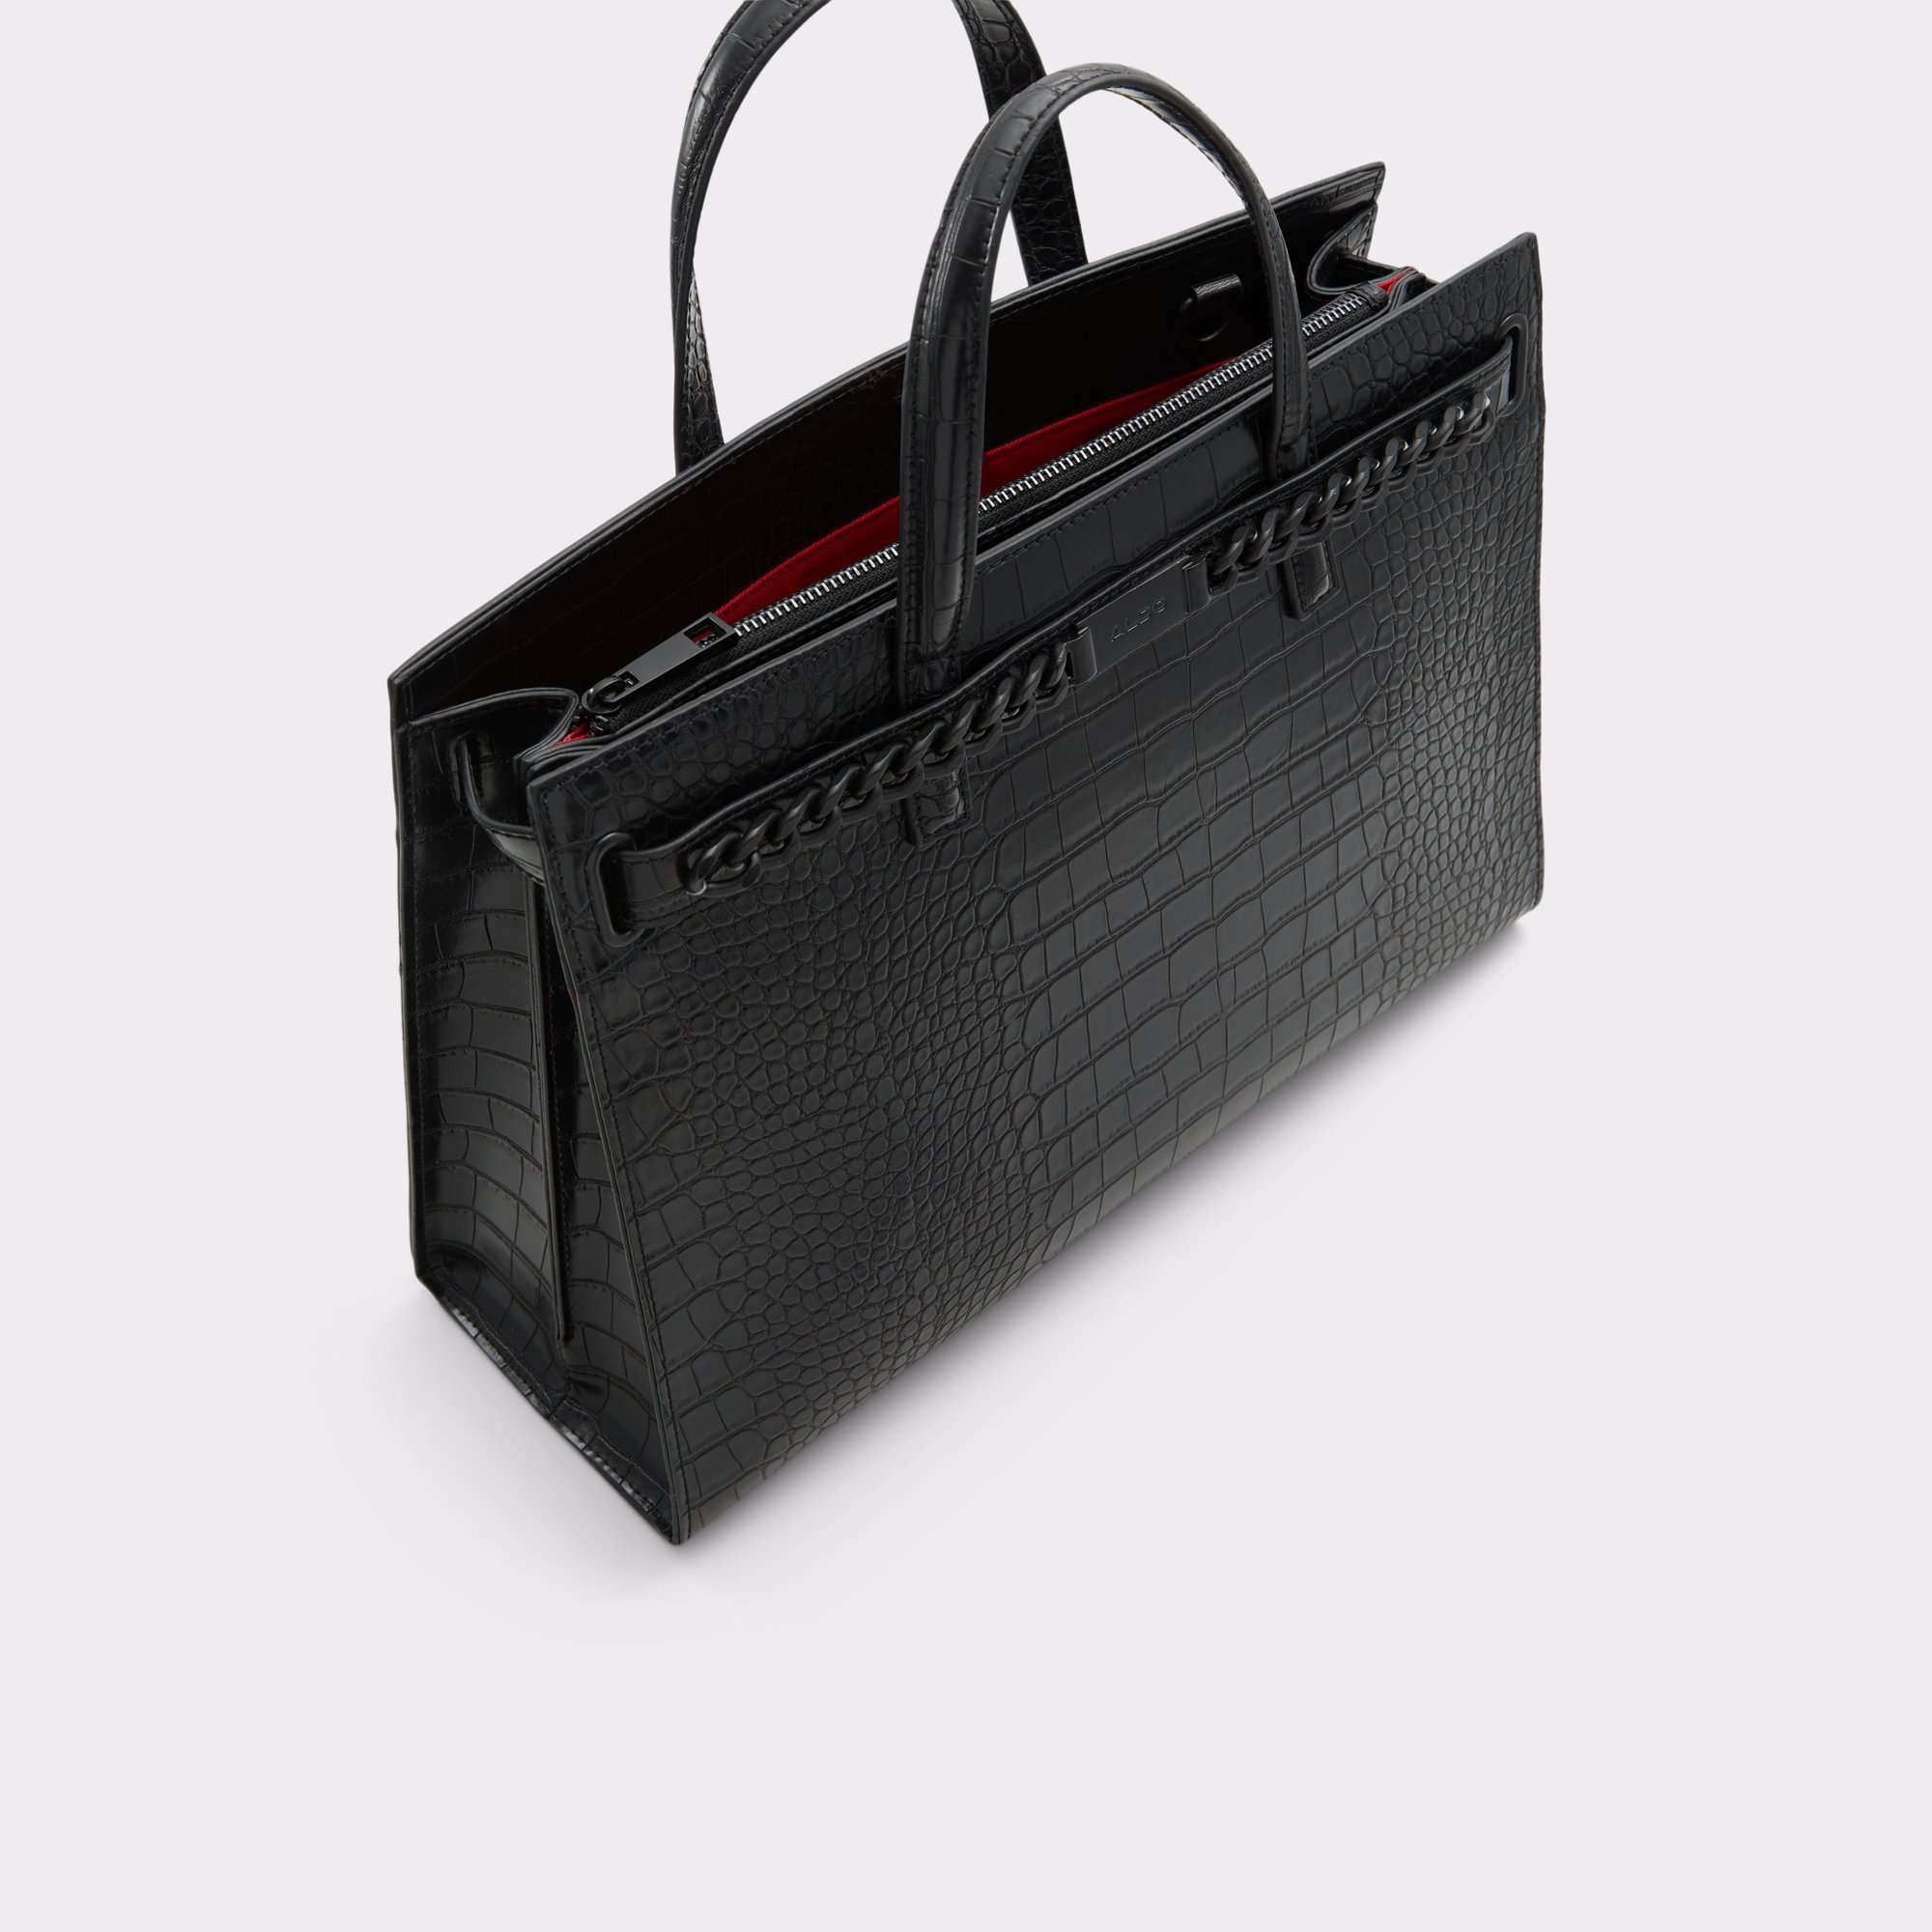 Handbags / Purses from Aldo for Women in Black